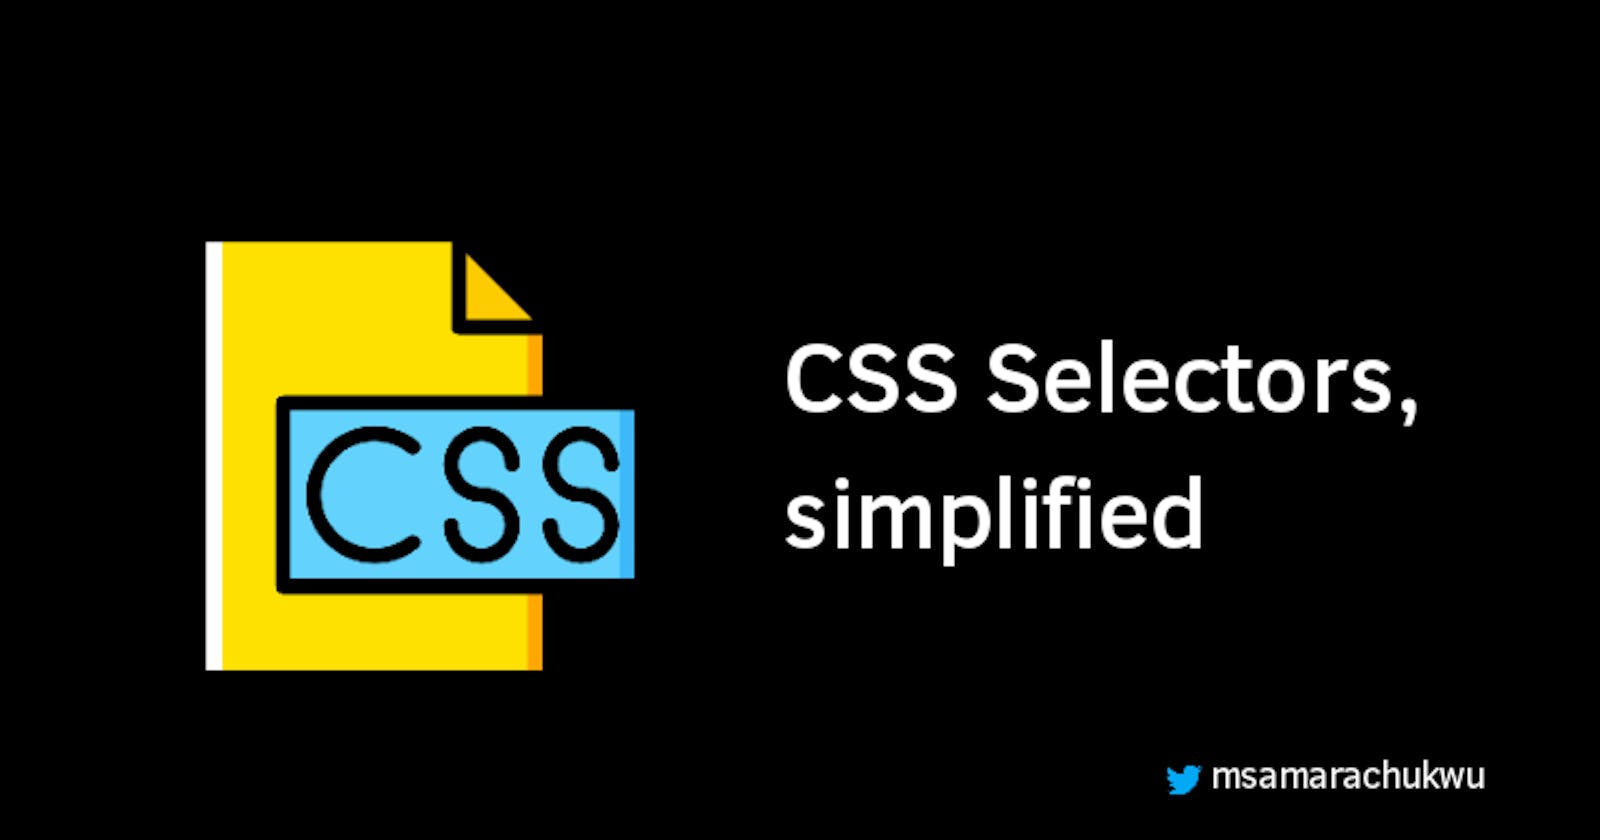 CSS Selectors, simplified